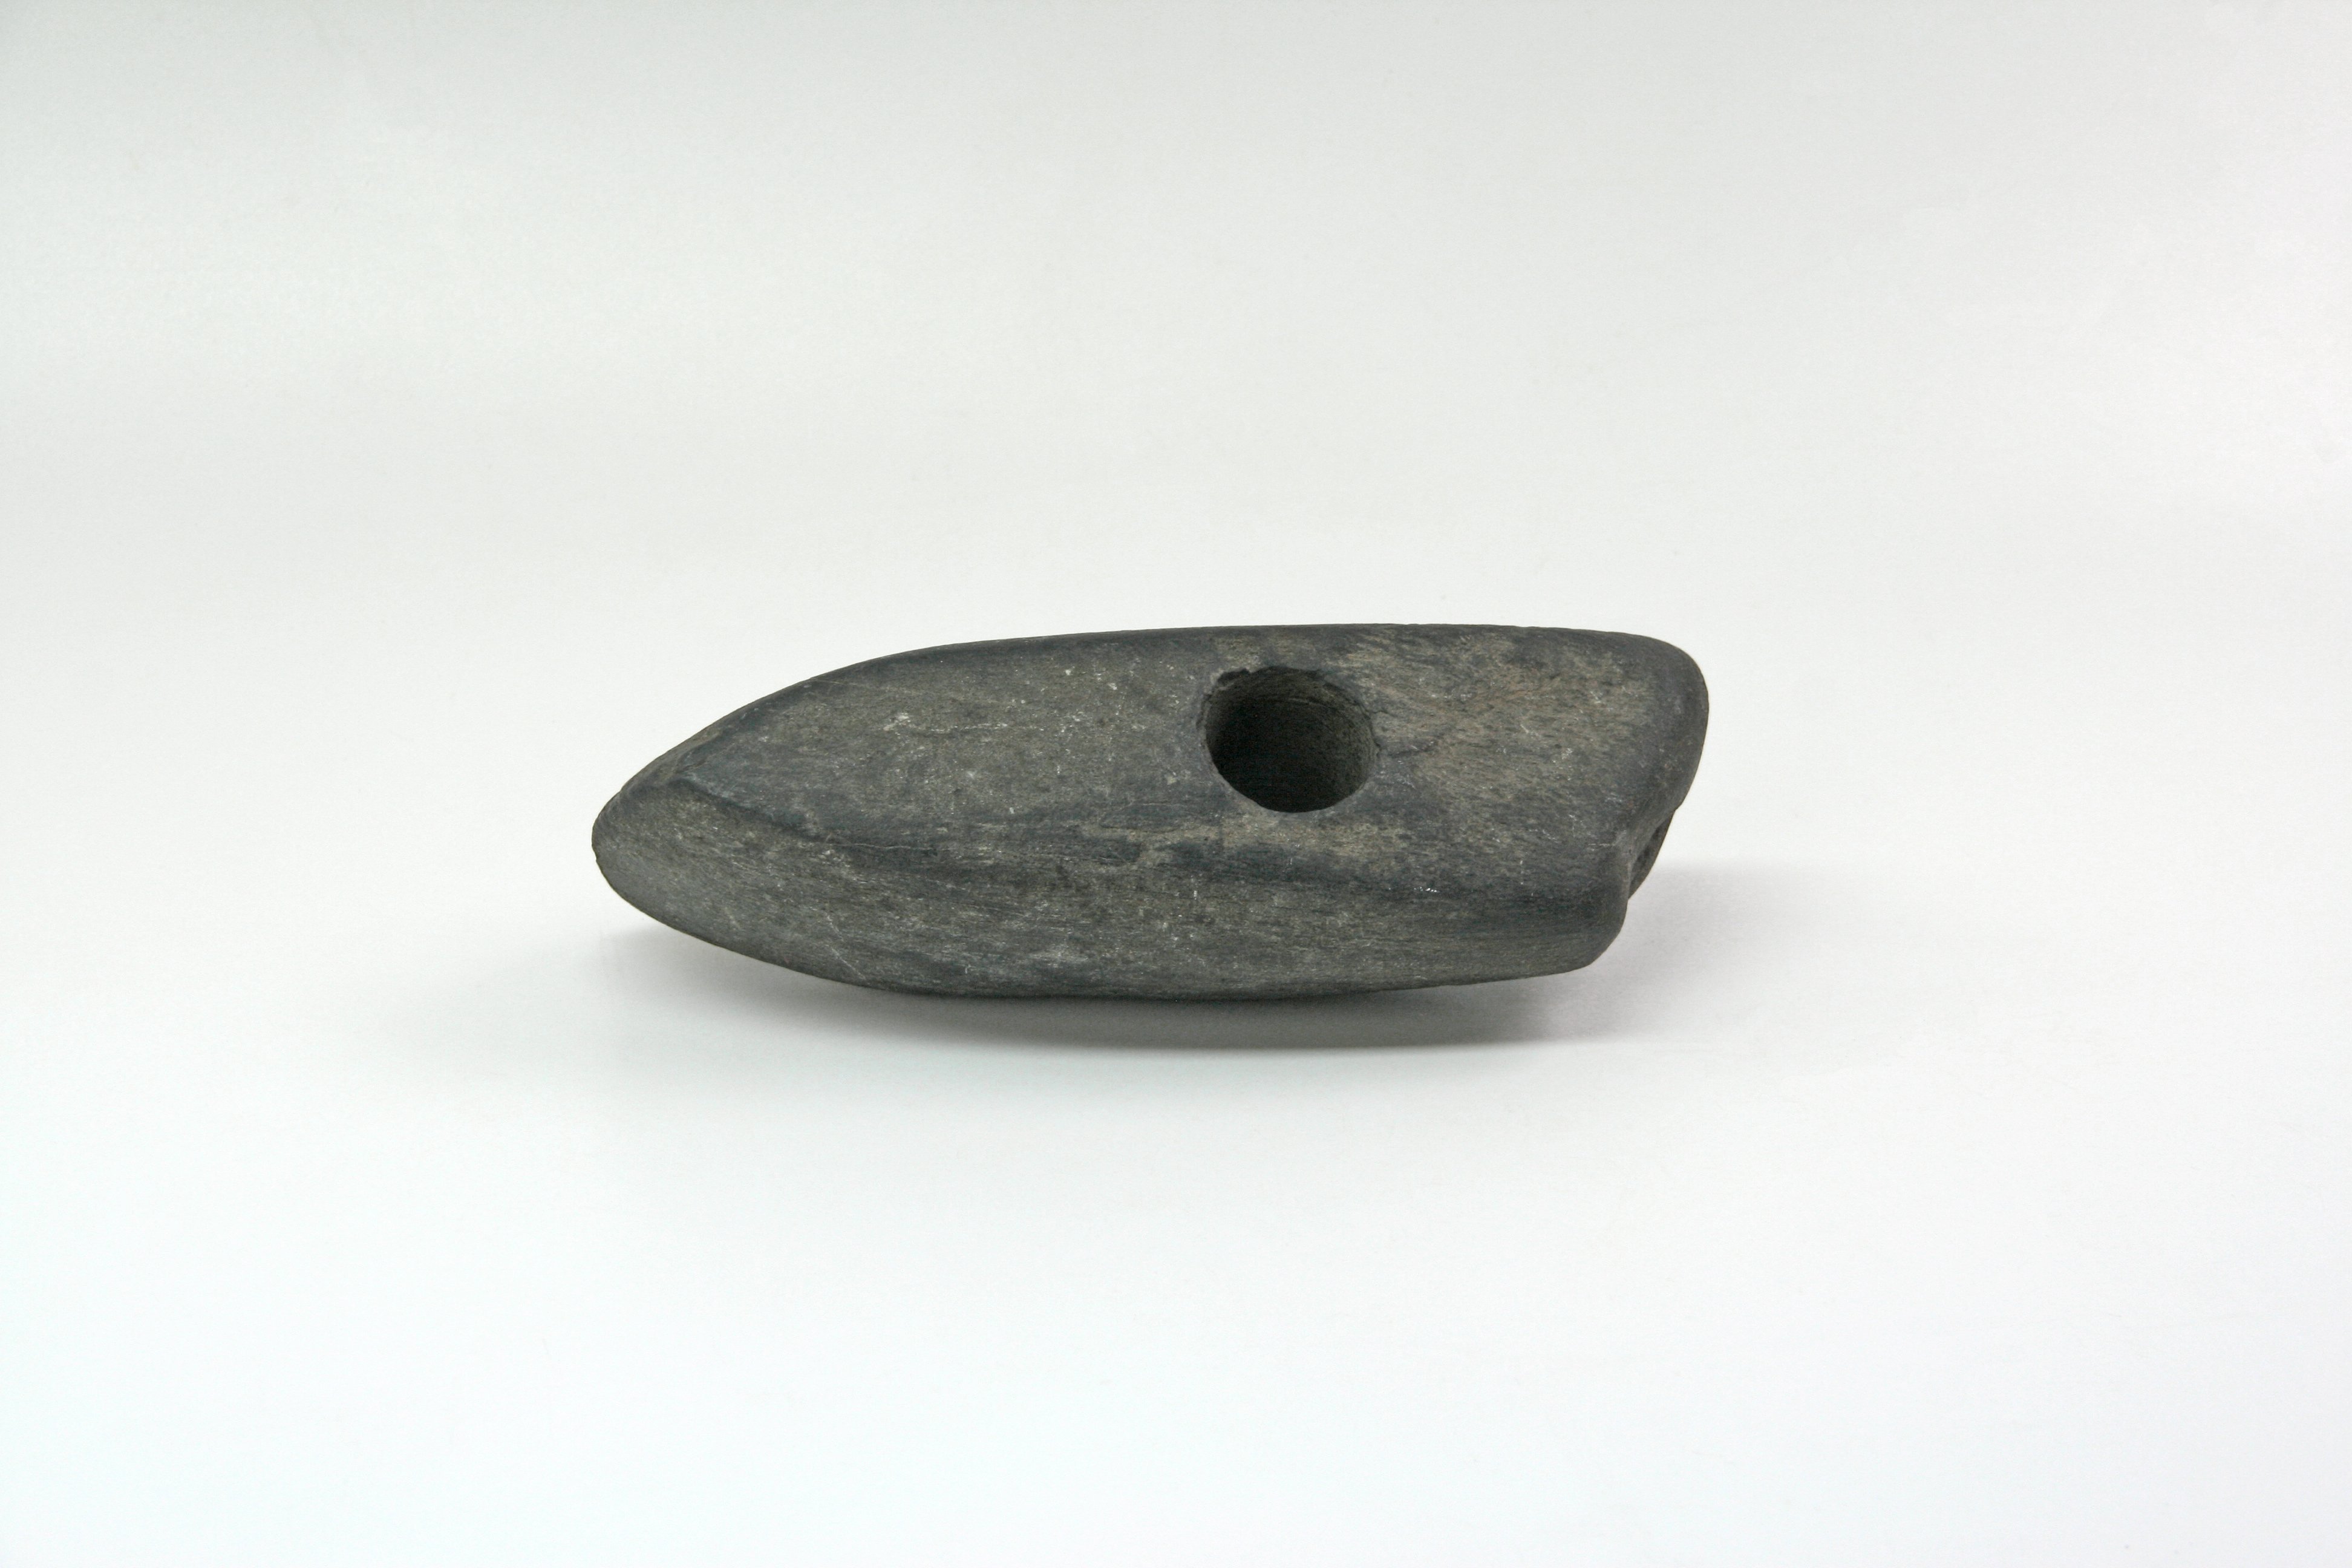 Axthammer (Neolithikum) (Binnenschifffahrts-Museum Oderberg CC BY-NC-SA)